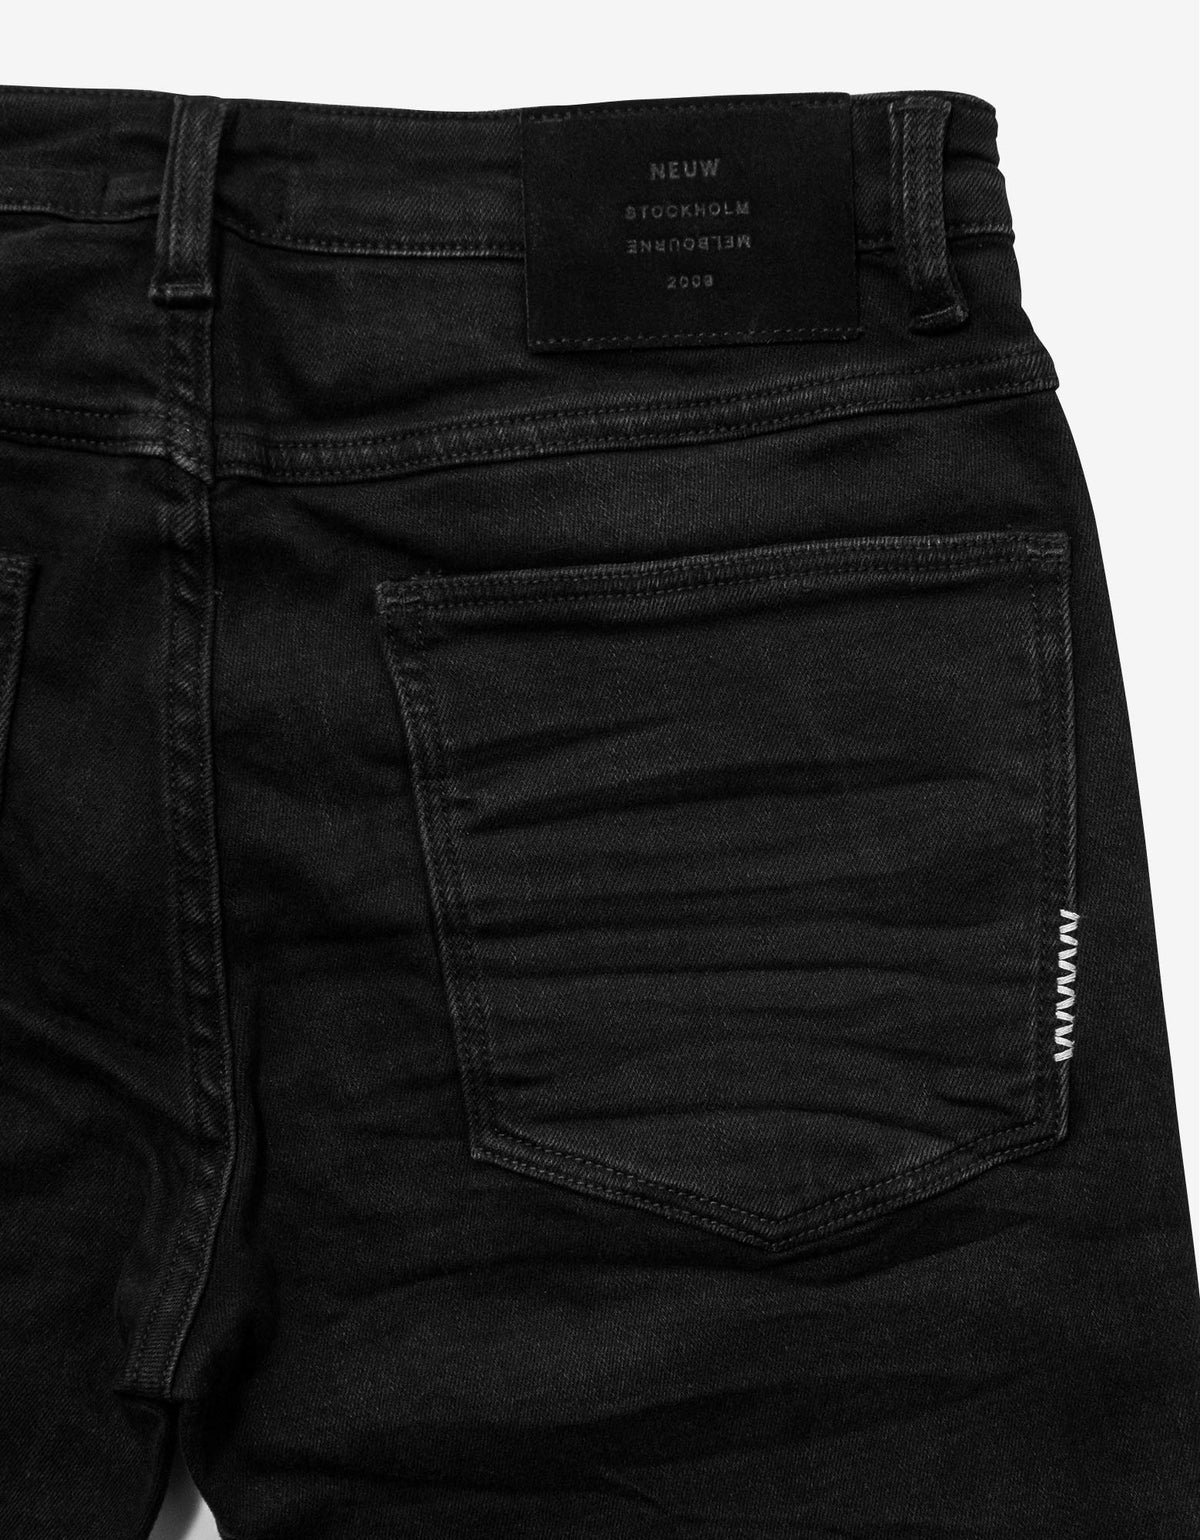 Neuw Rebel Skinny Friction Distressed Black Jeans